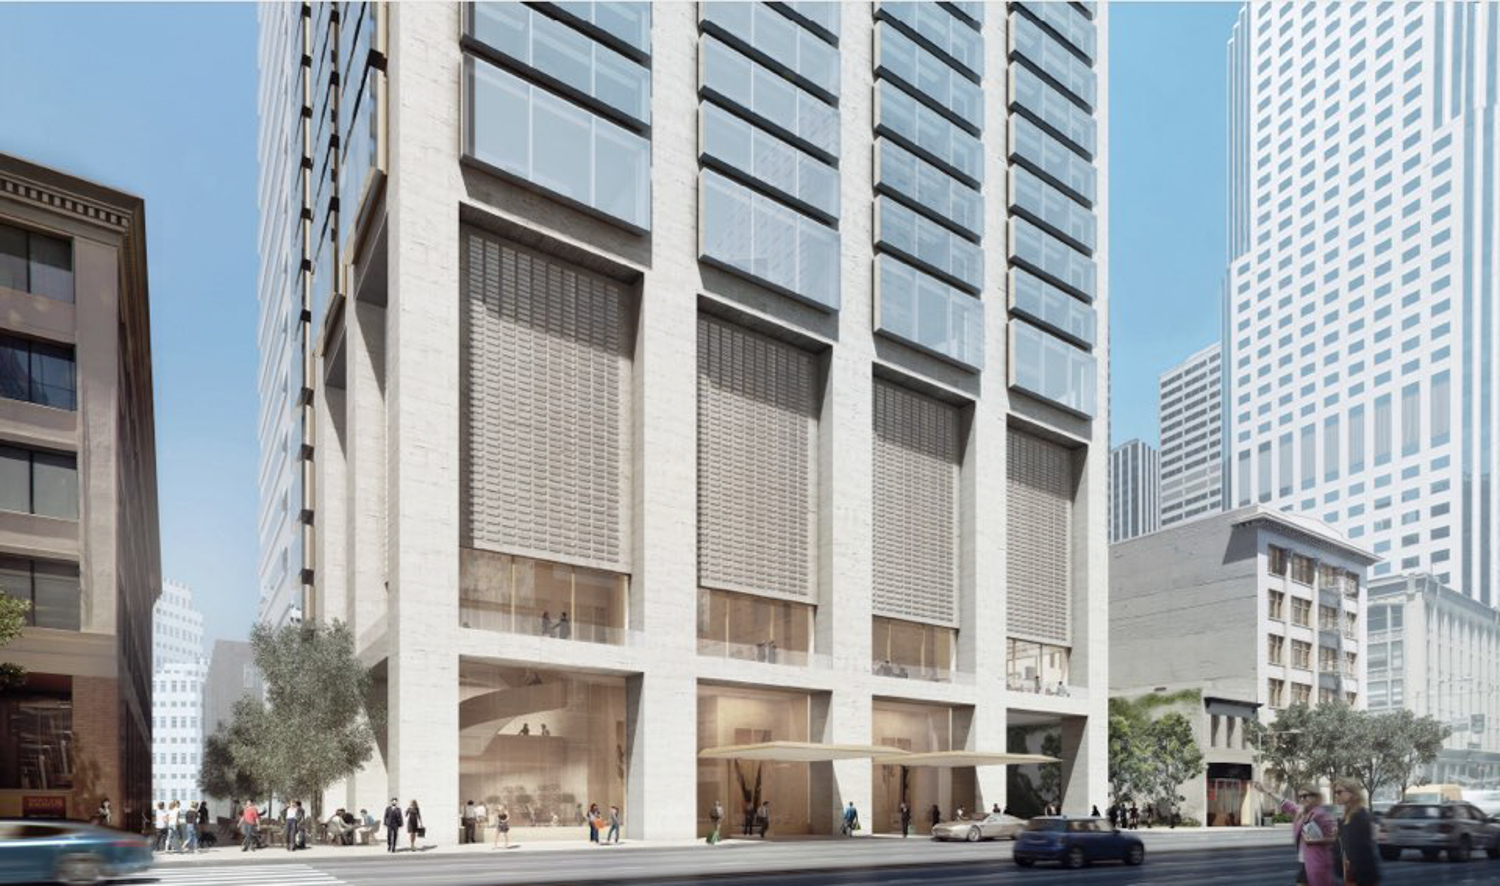 Waldorf Astoria base, rendering of design by Heller Manus Architects